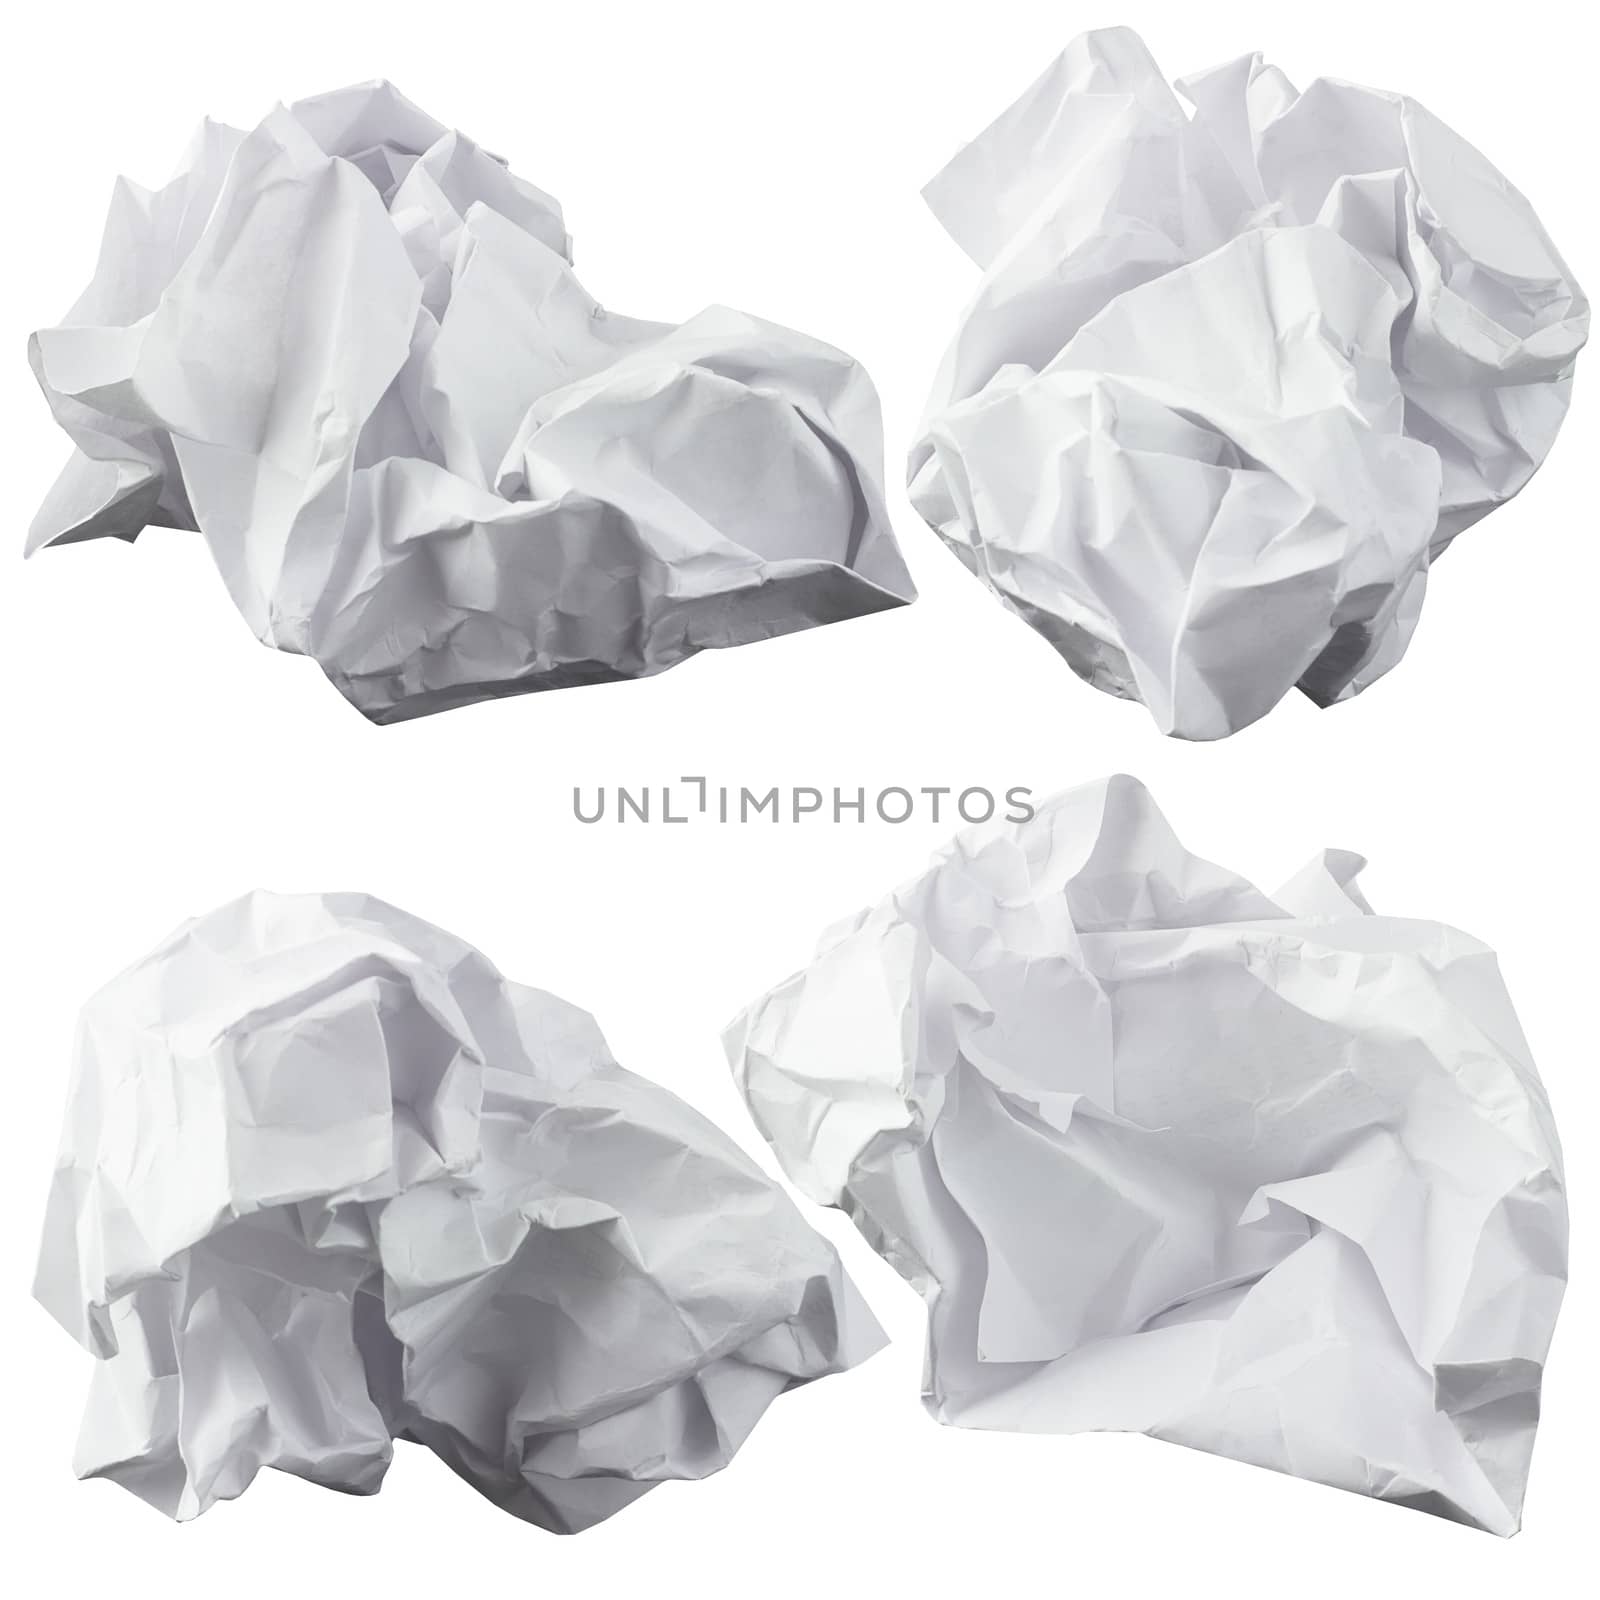 Crumpled paper. Four lump. The design elements